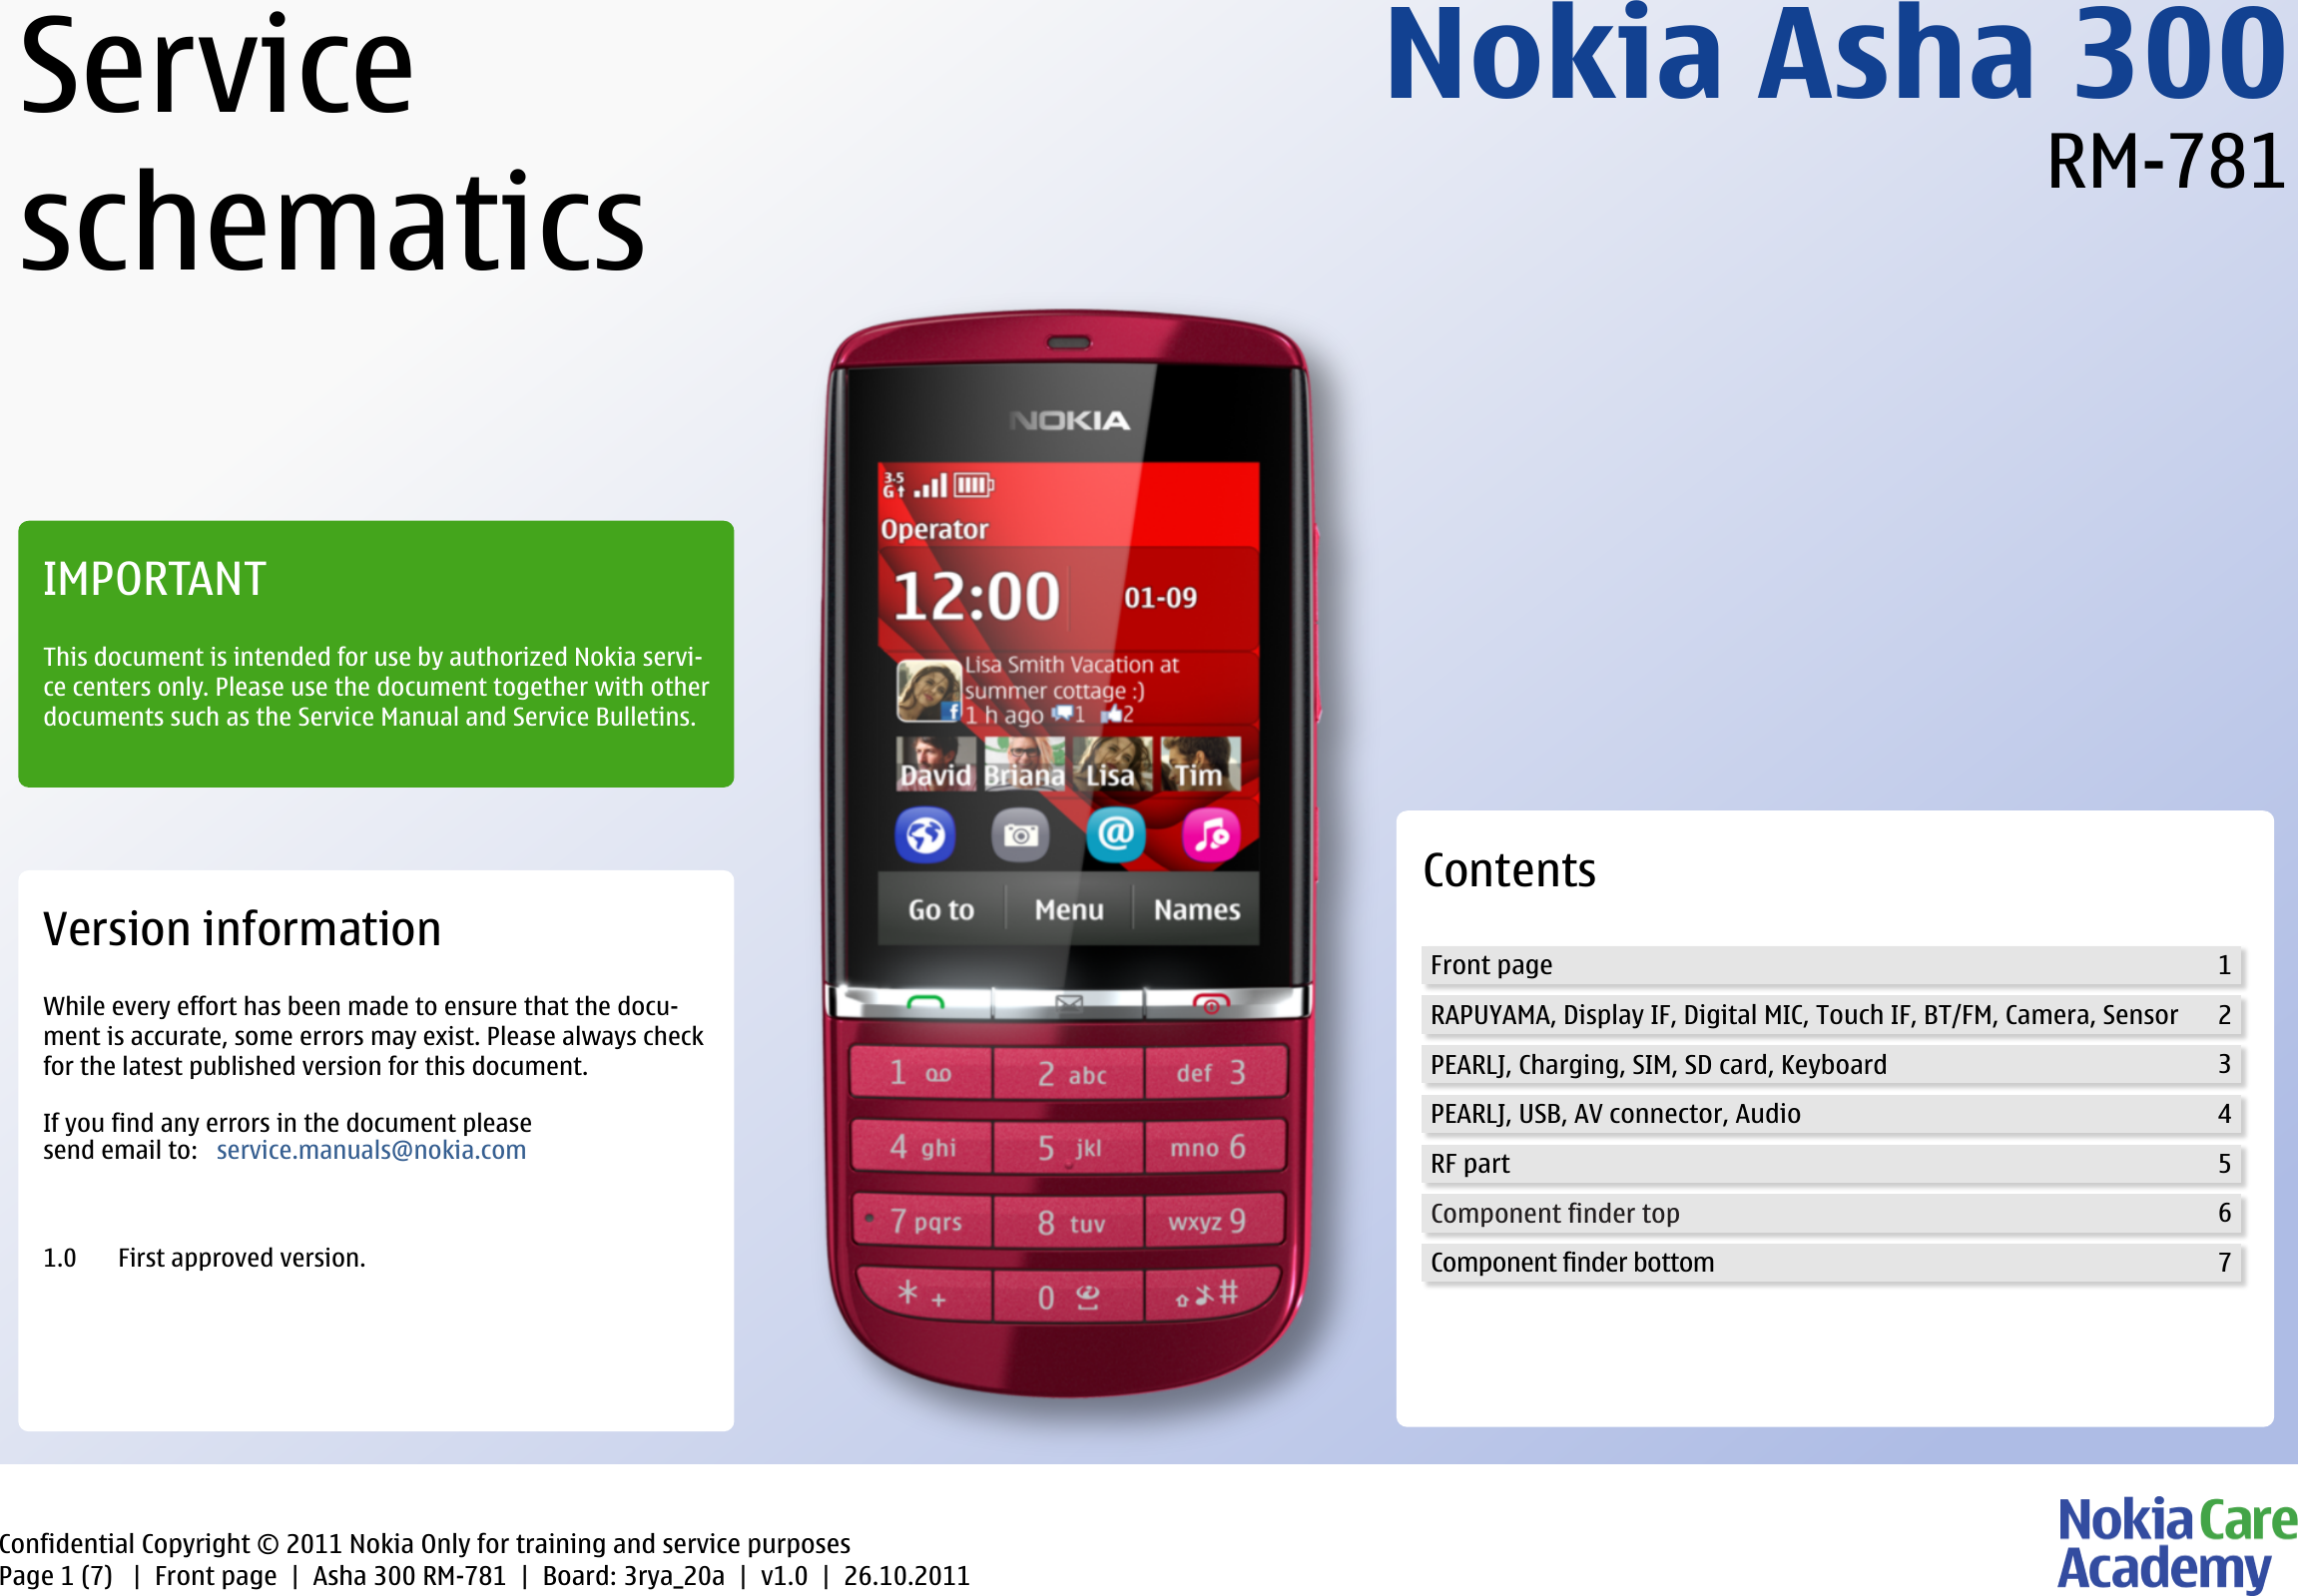 Page 1 of 8 - Nokia Asha 300 RM-781 - Service Schematics. Www.s-manuals.com. Schematics V1.0